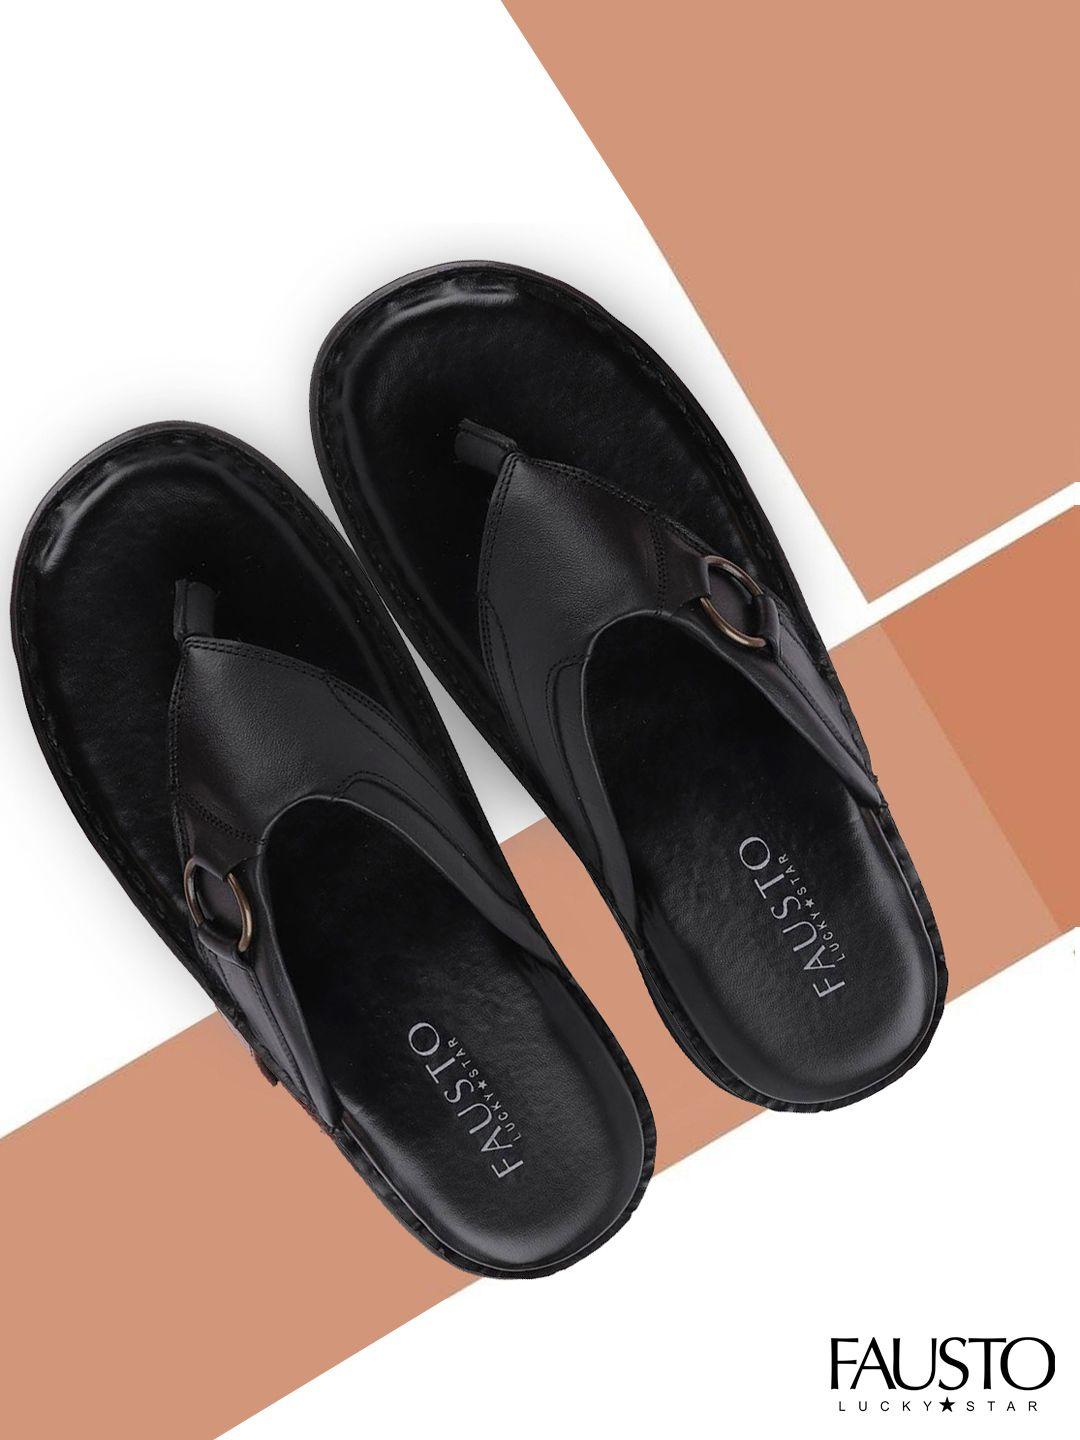 fausto men black leather comfort sandals